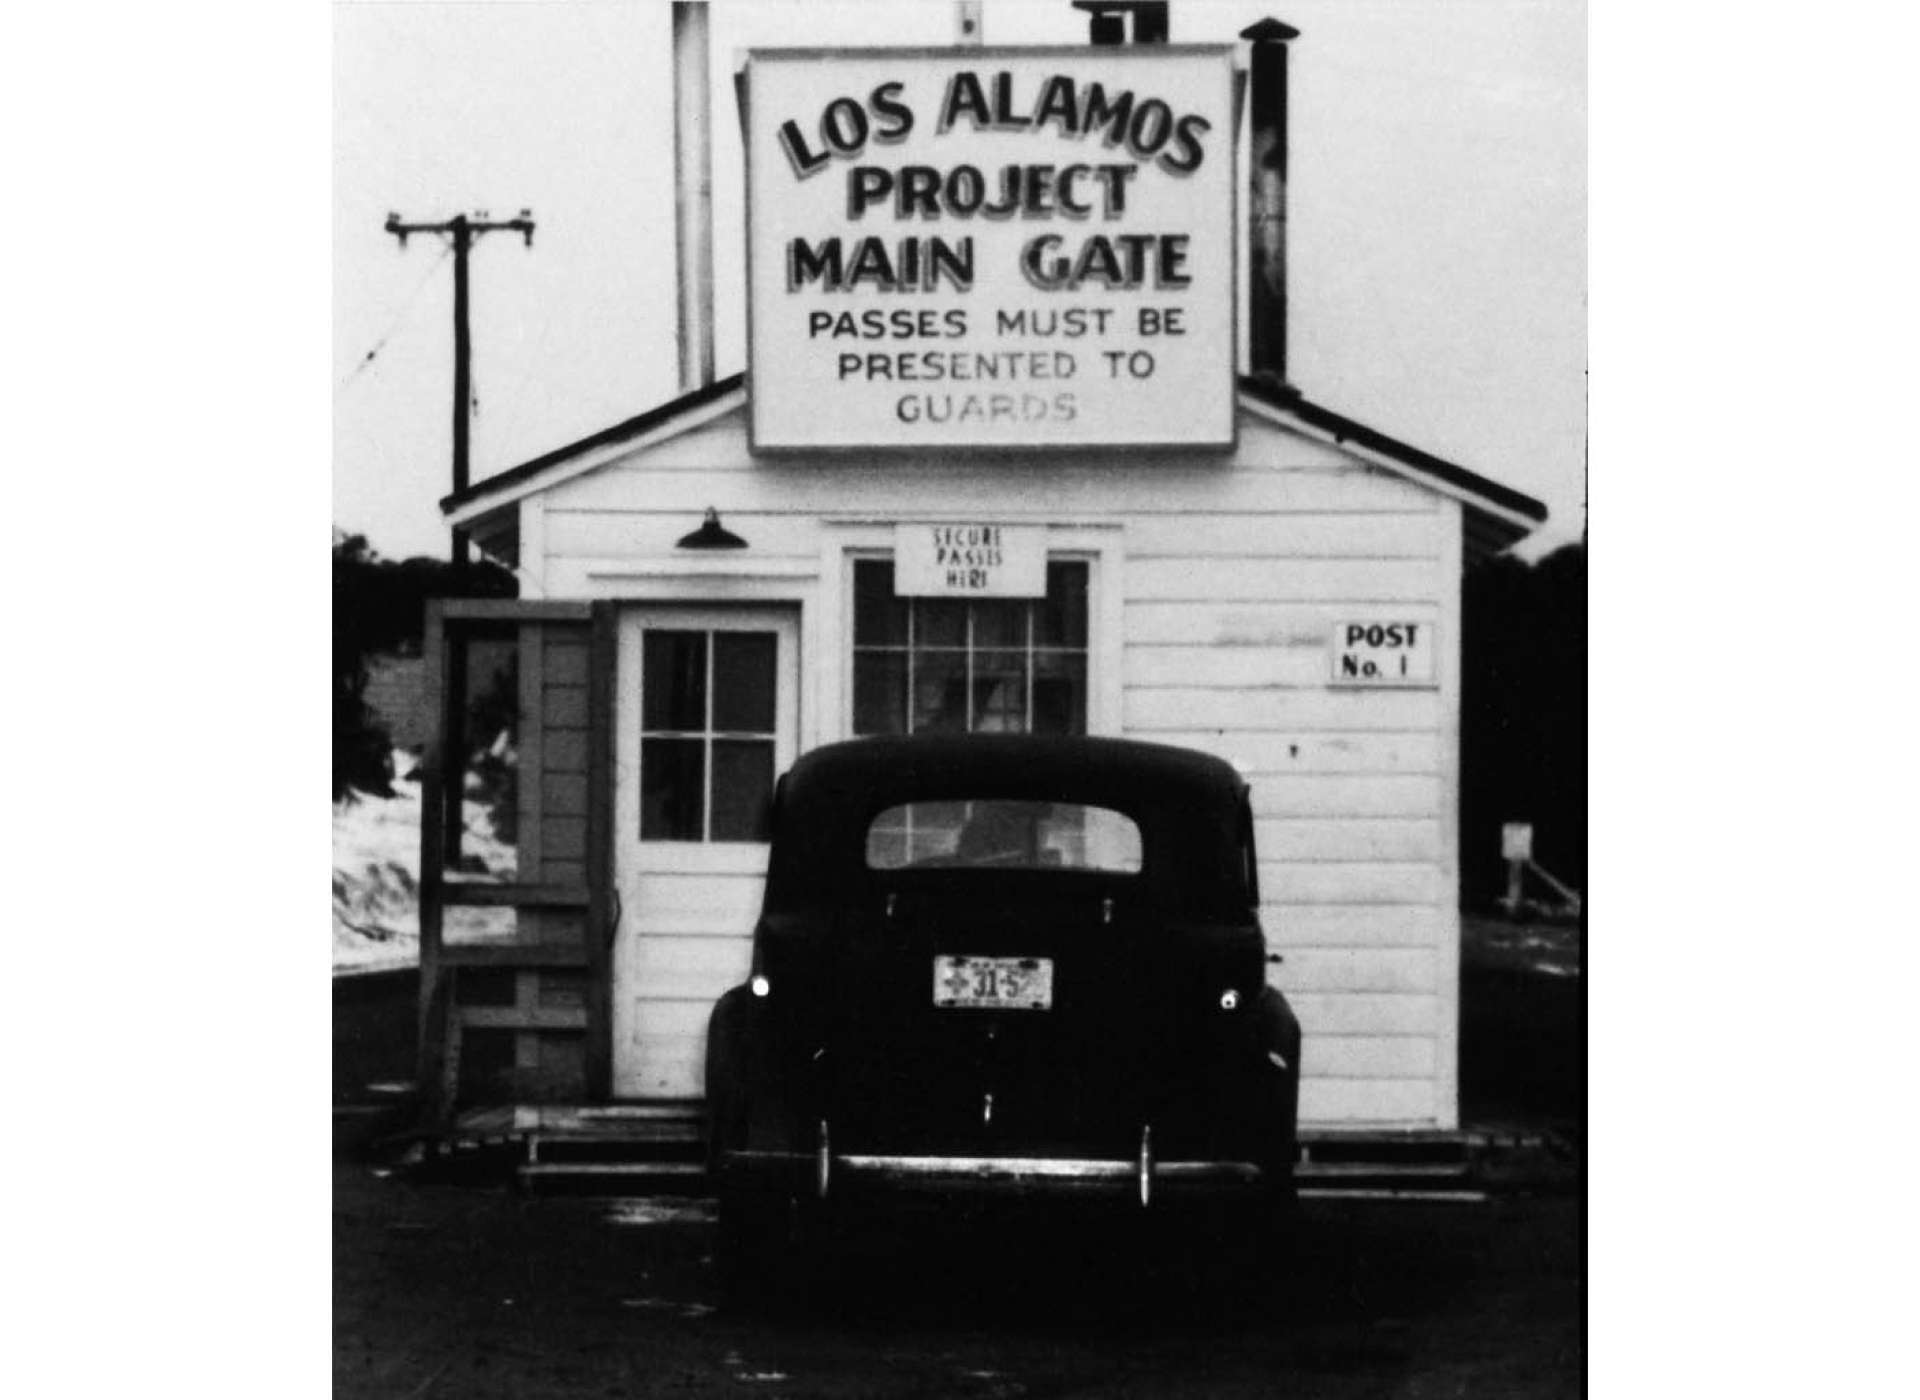 1943 Los Alamos Project Main Gate. Courtesy of Los Alamos National Laboratory.